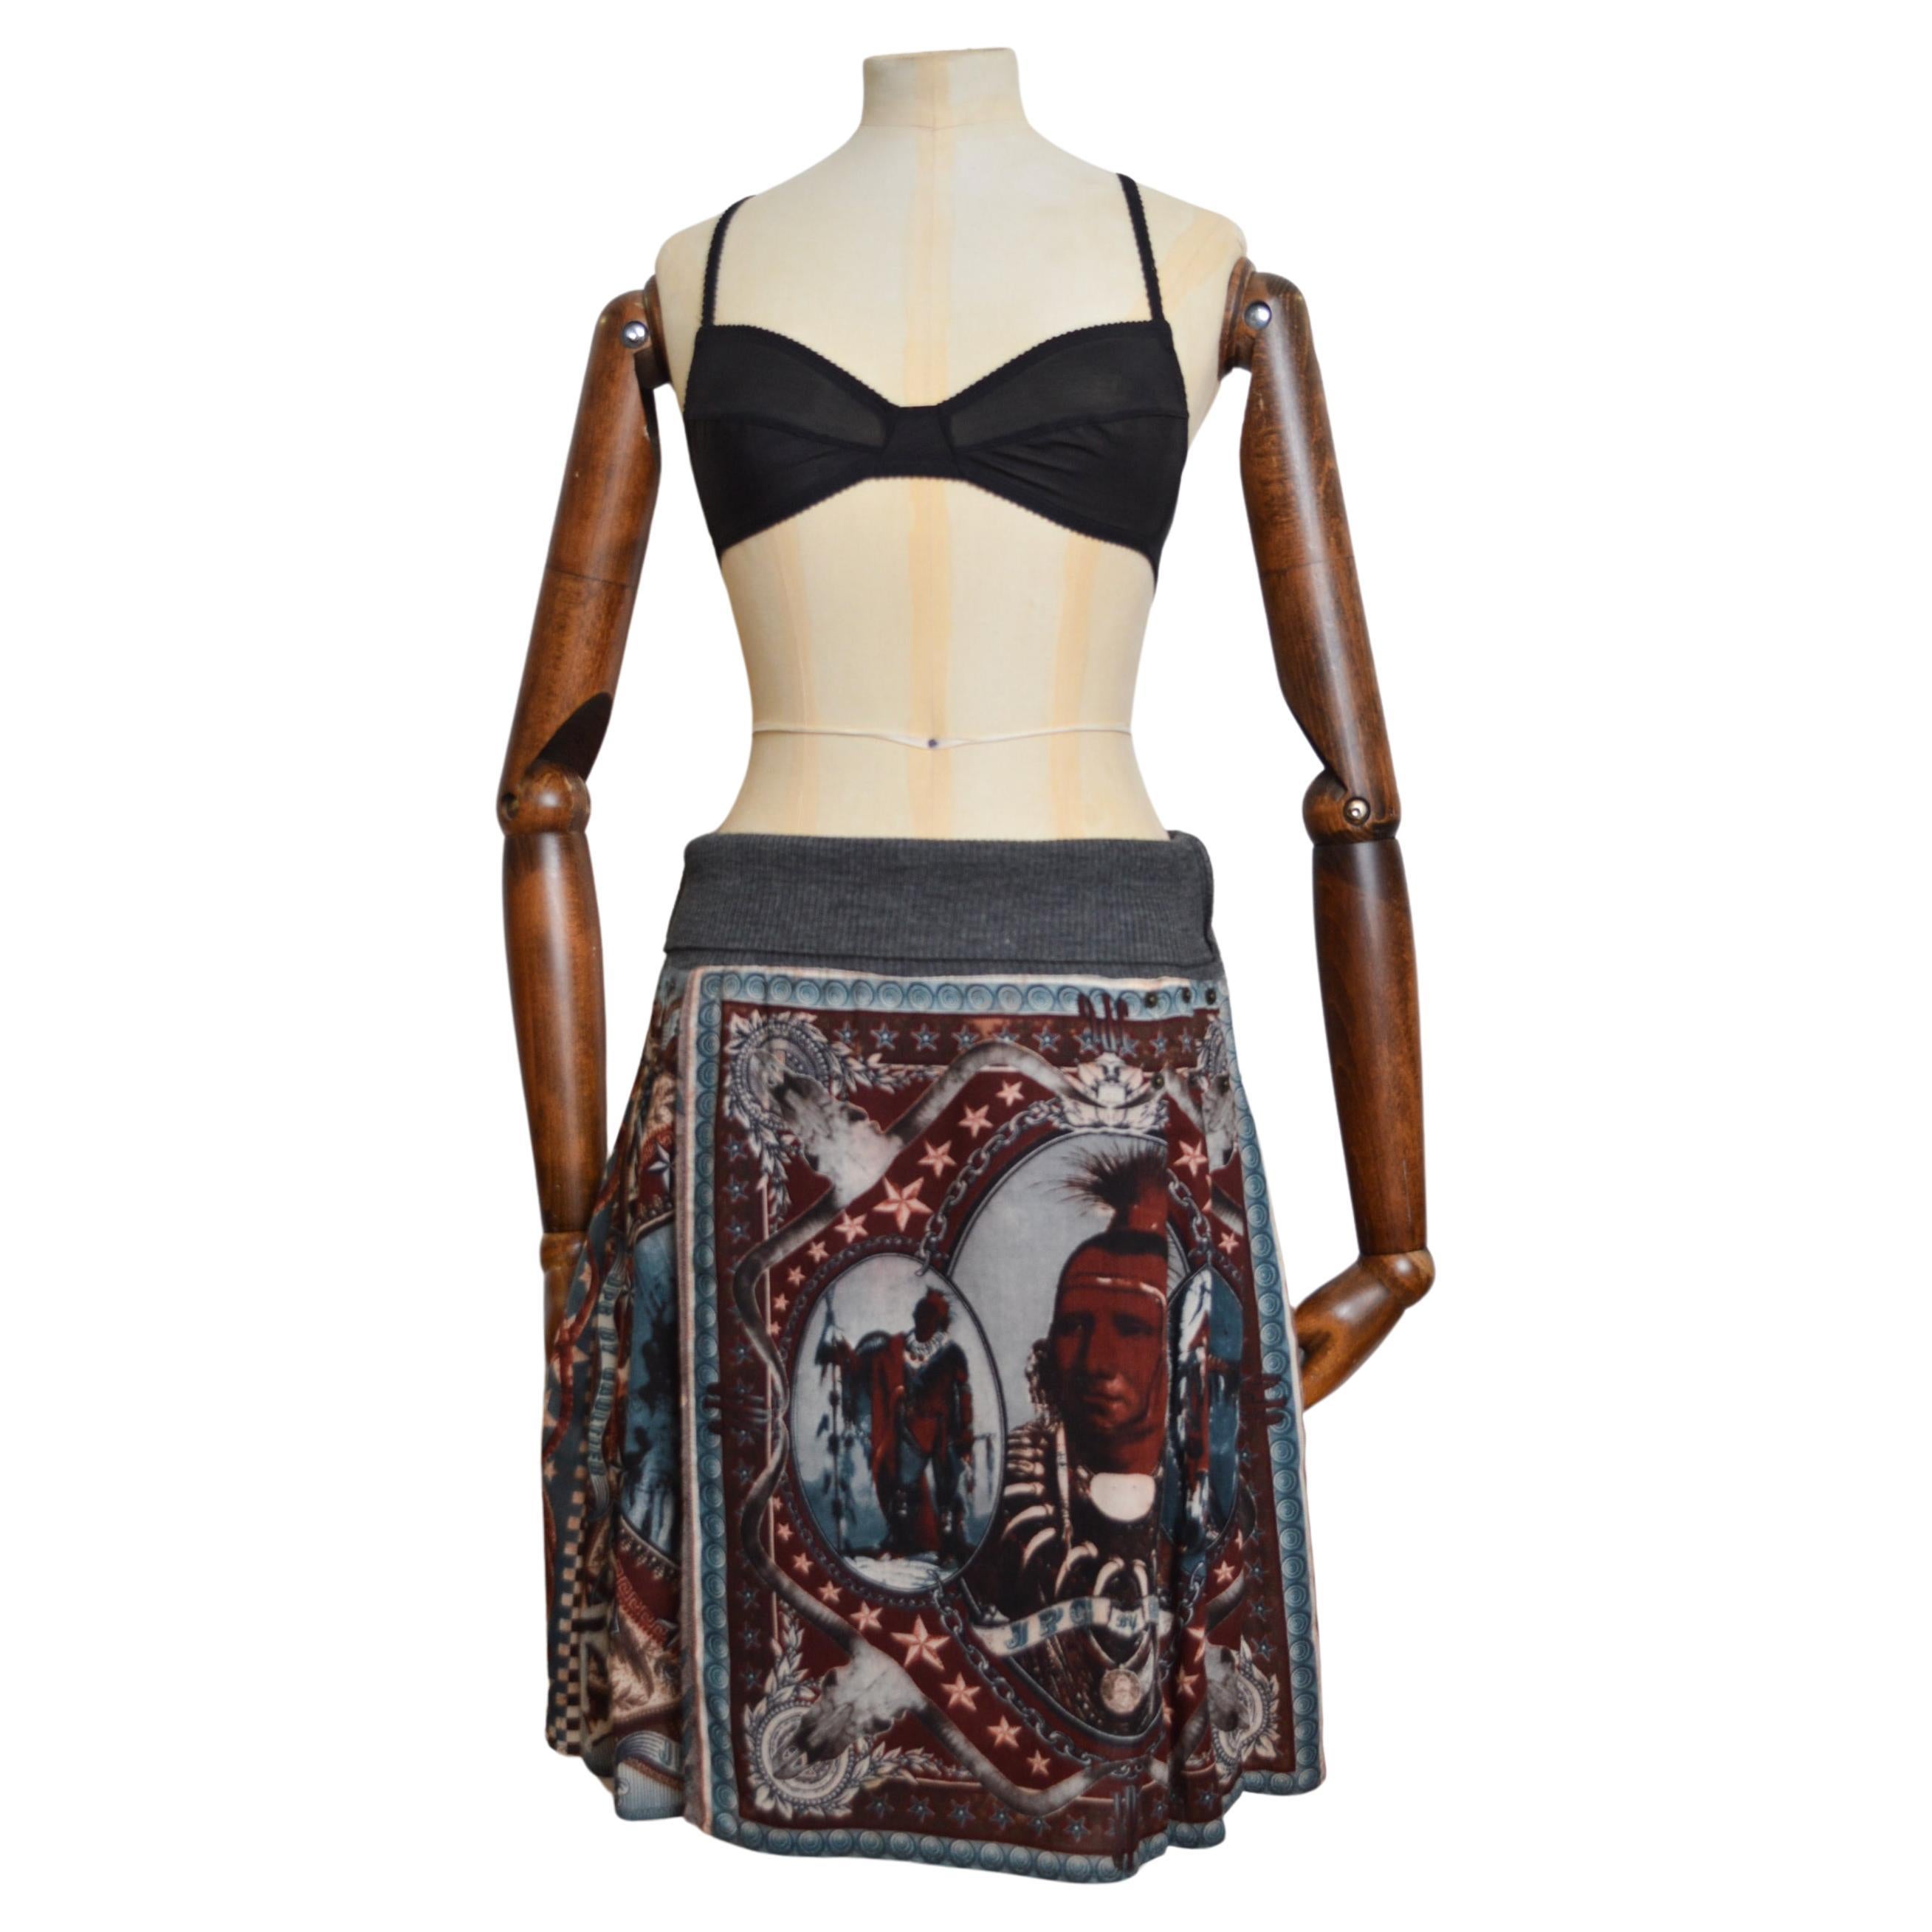 AW 1994 Vintage Jean Paul Gaultier Native American Print Avant Guard Kilt Skirt For Sale